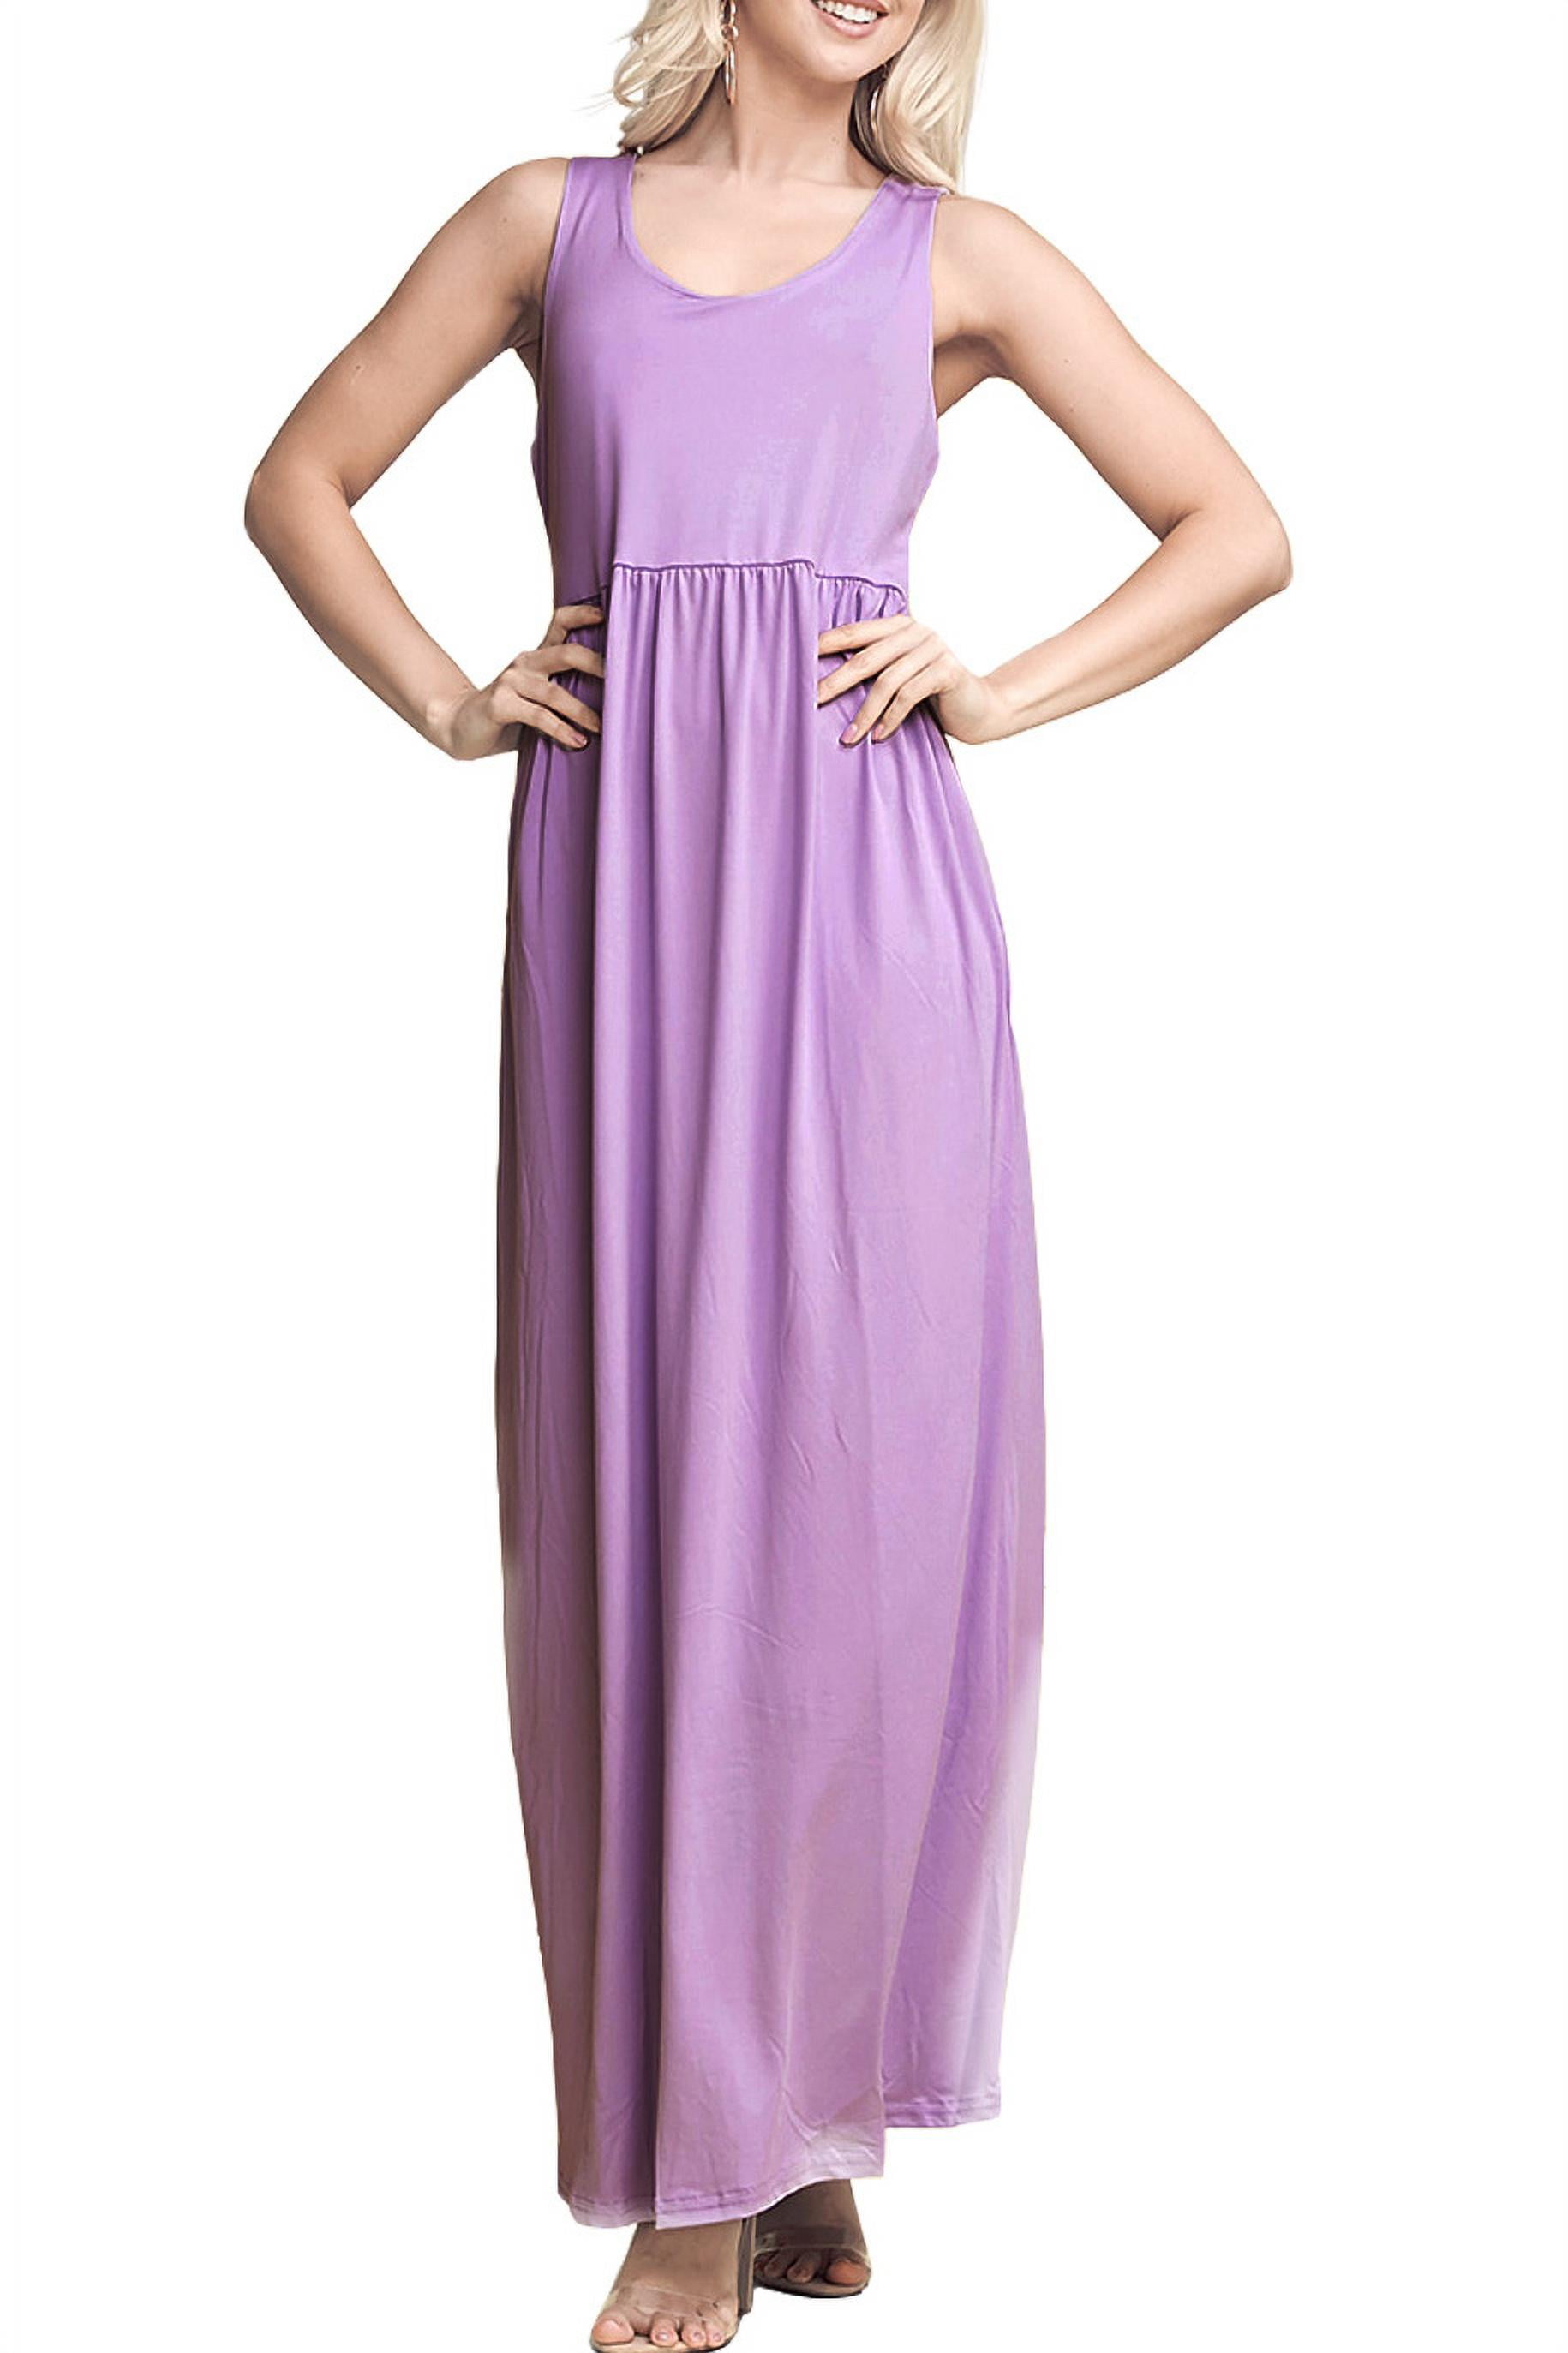 Doublju Women's Empire Seam Sleeveless Maxi Dress with Pockets (Plus Size Available)